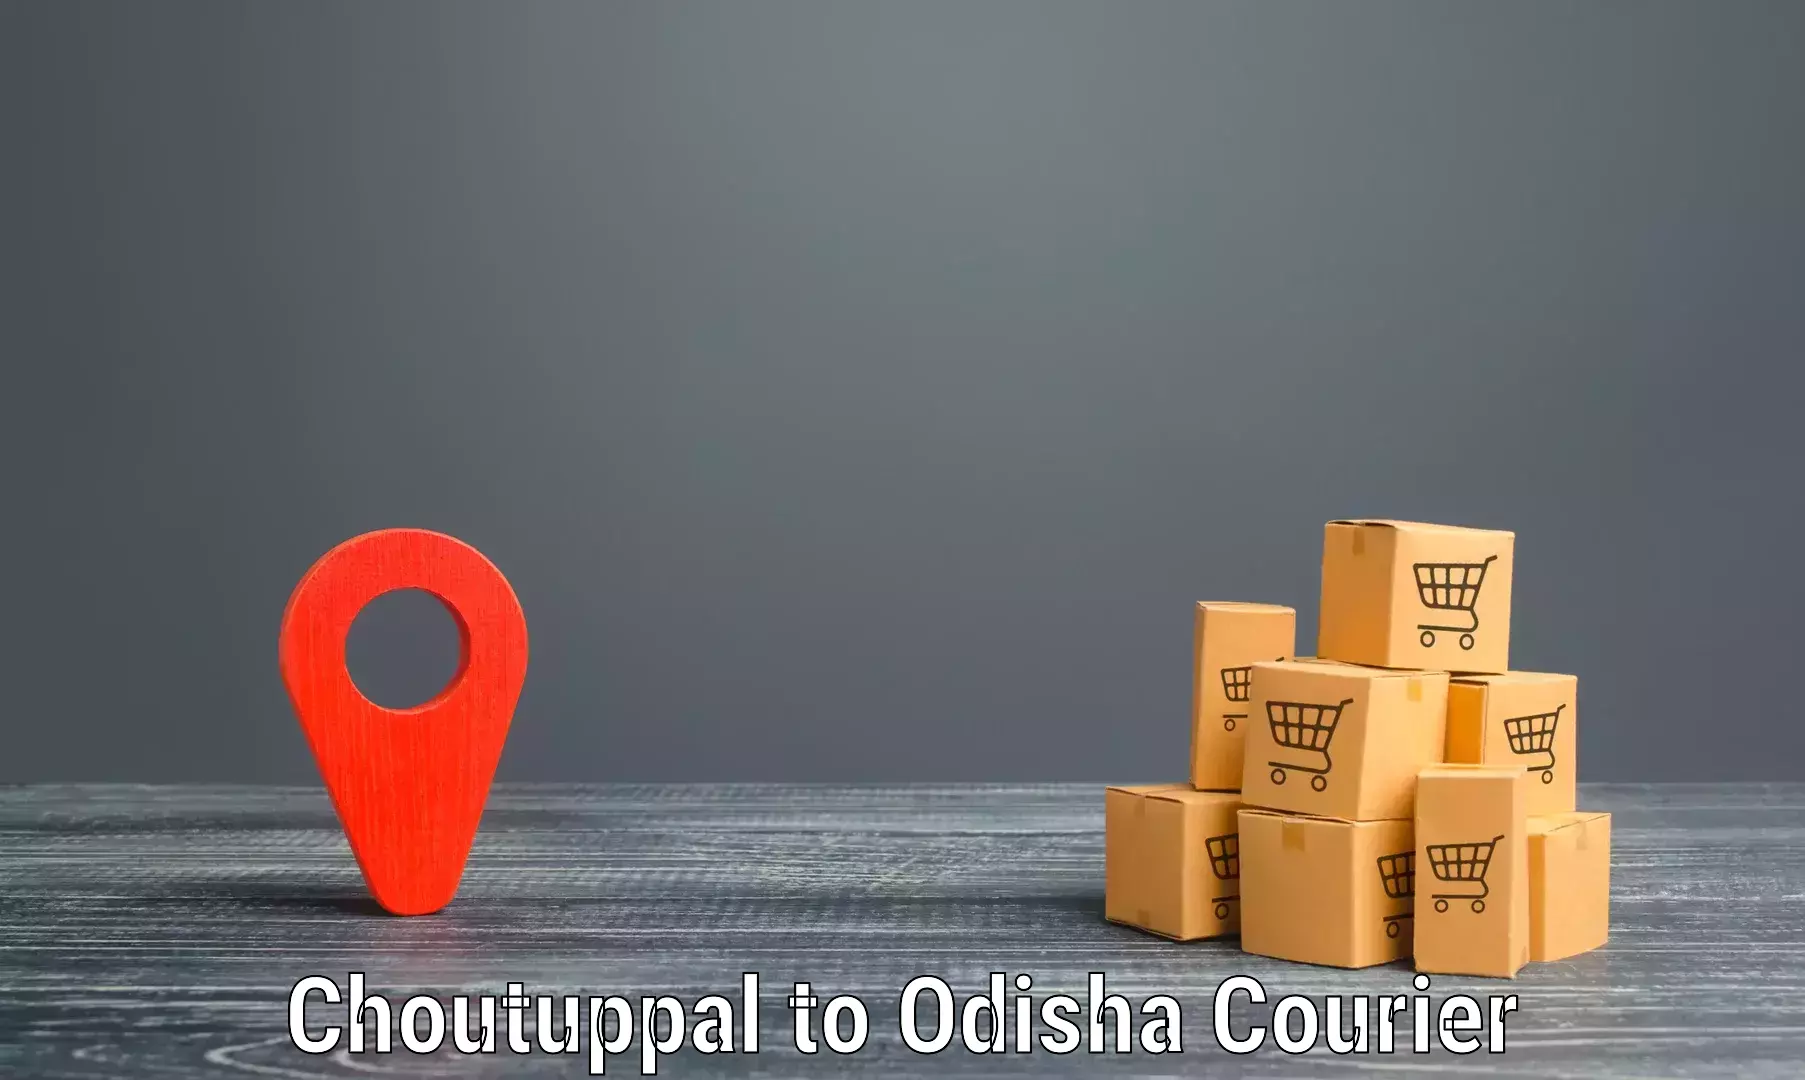 Digital courier platforms Choutuppal to Pappadahandi